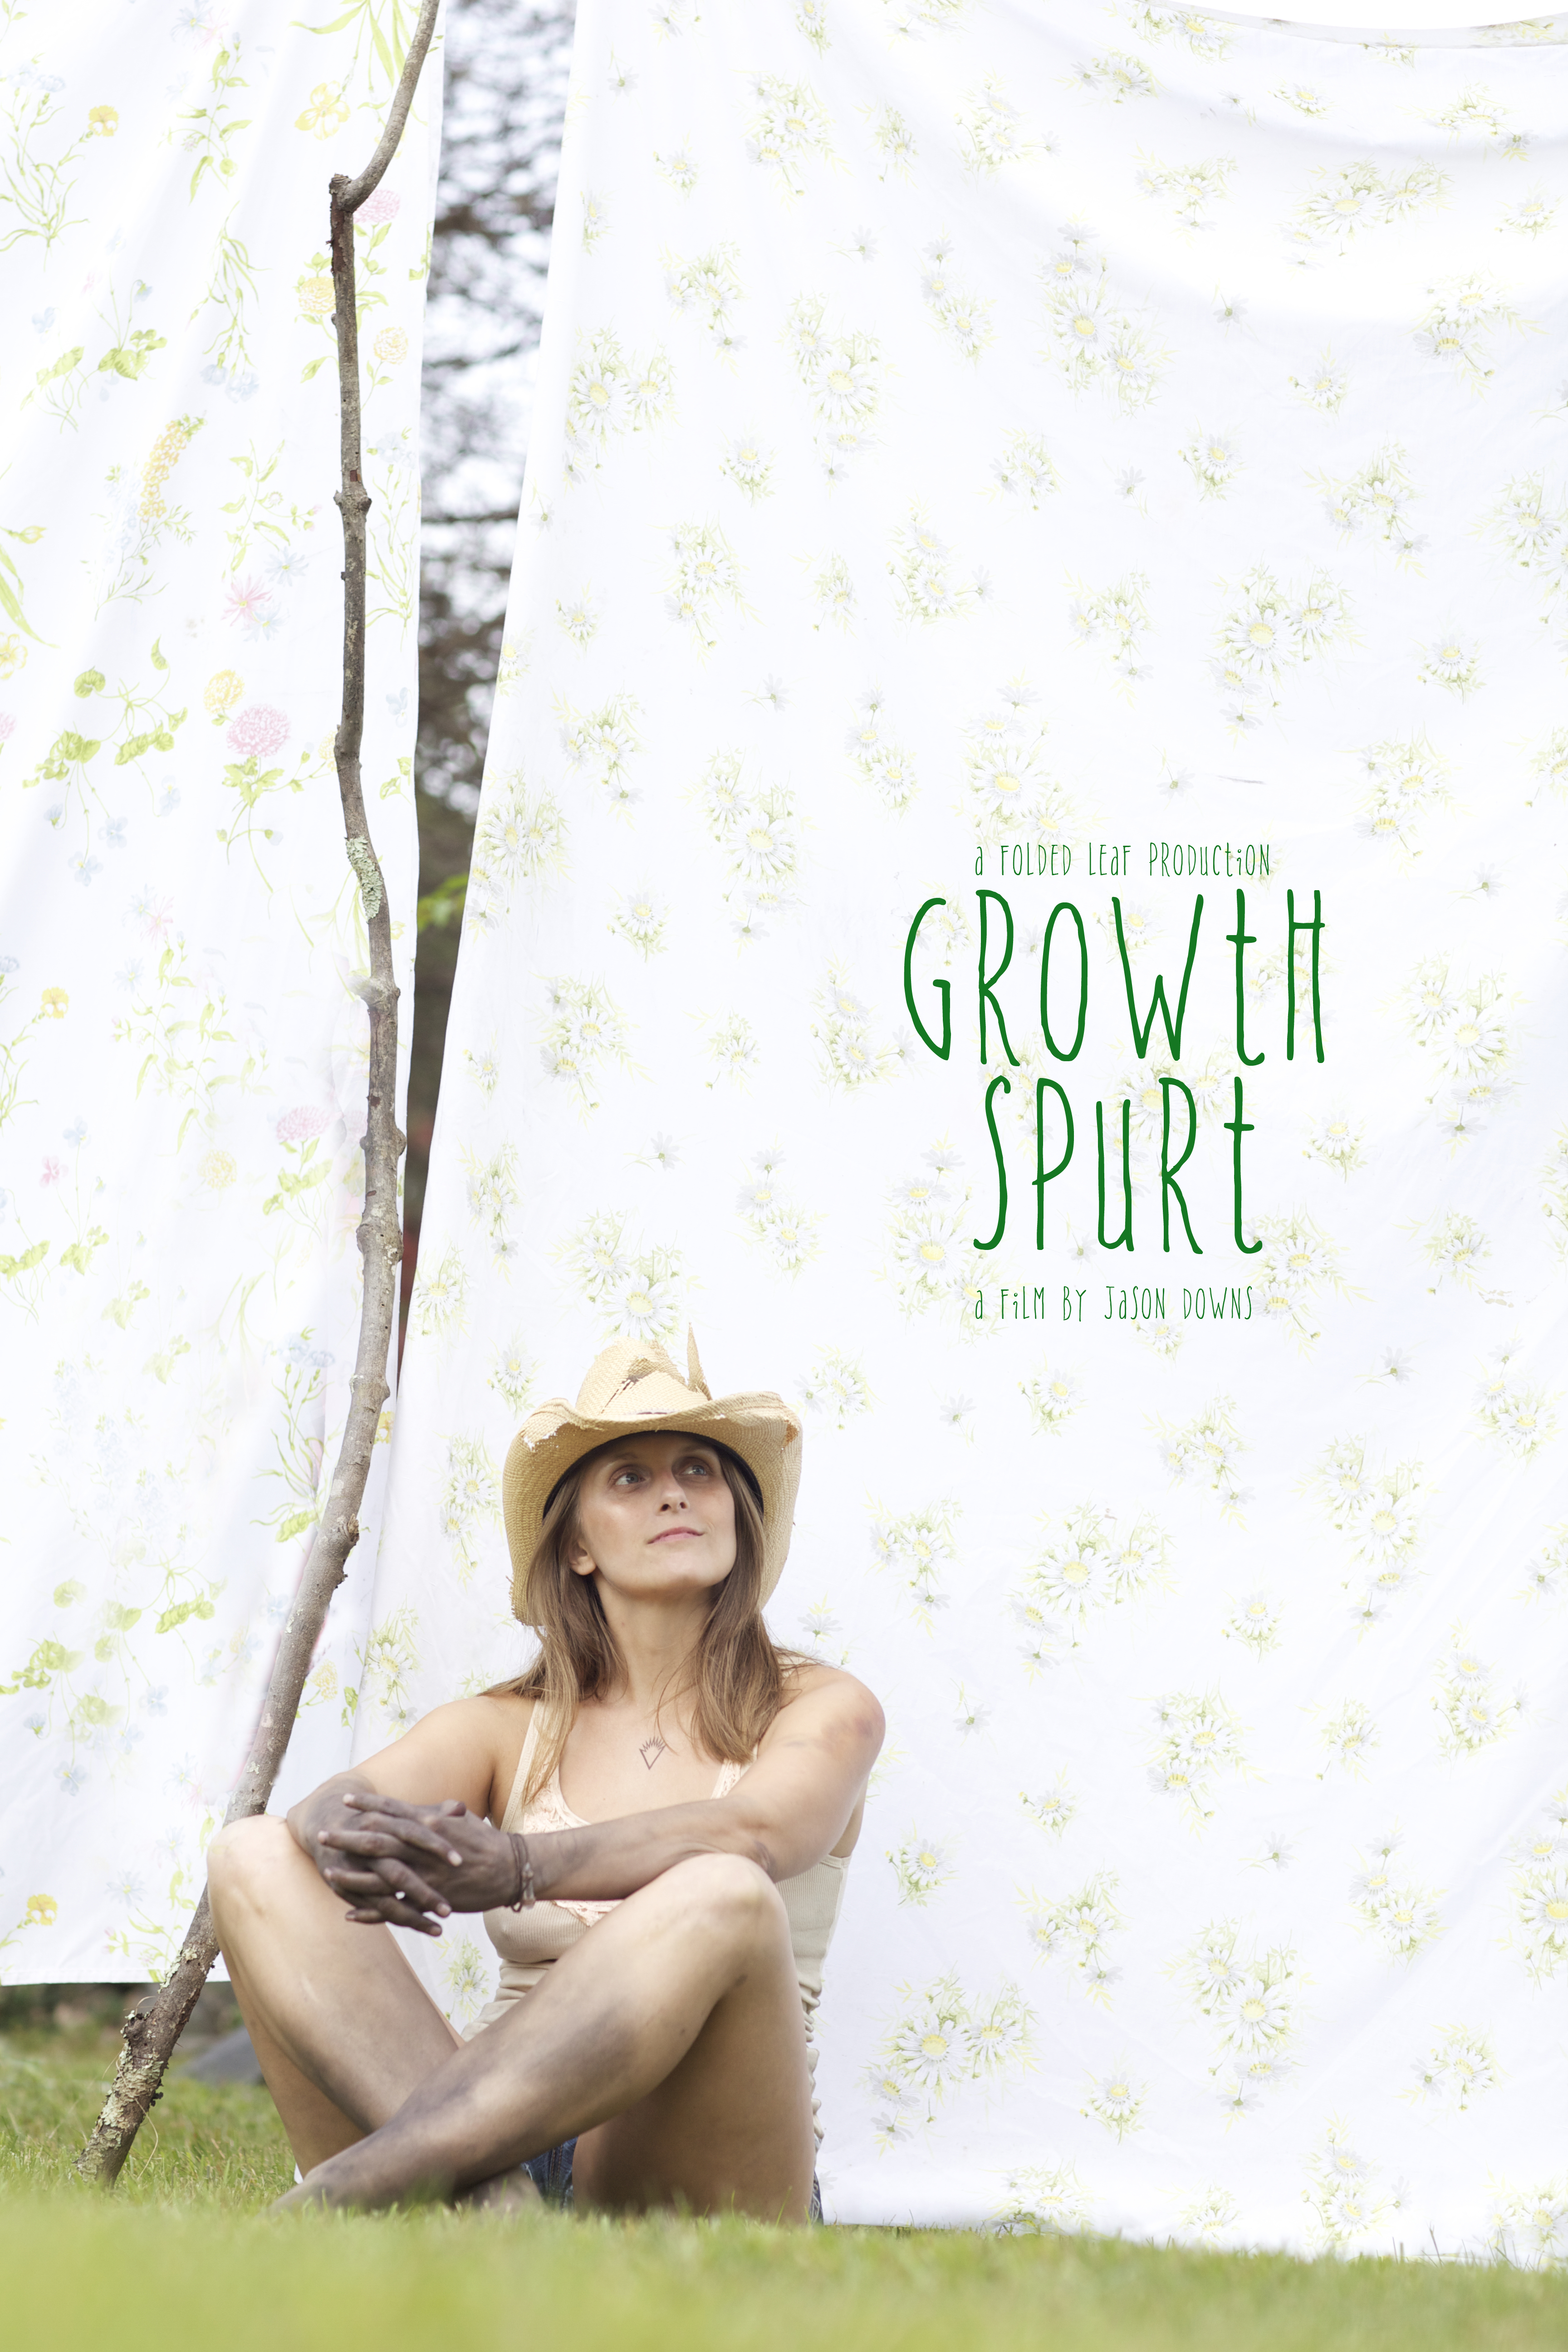 Growth Spurt Poster